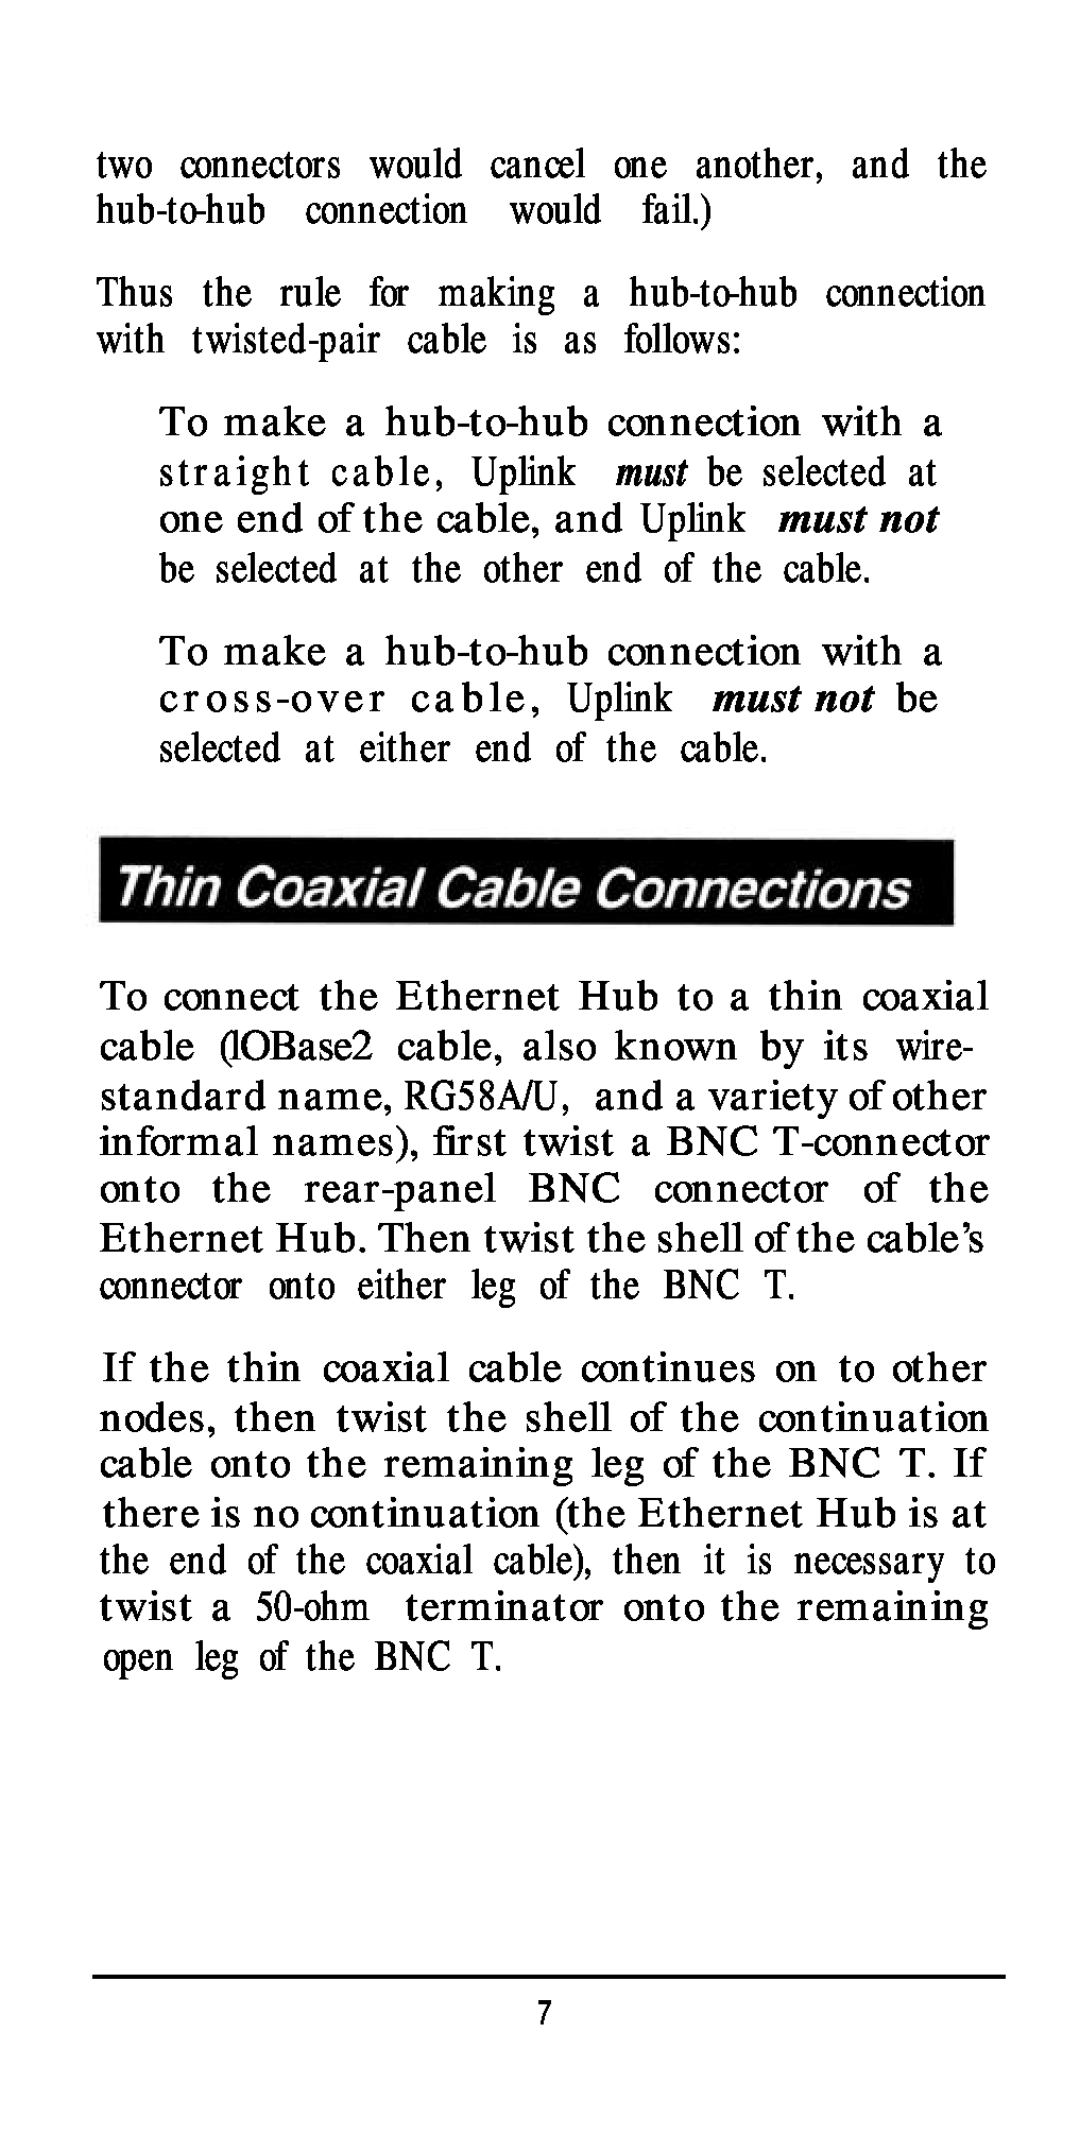 D-Link DE-81 6TP, DE81 2TP+, DE-824TP two connectors would cancel one another, and the hub-to-hub connection would fail 